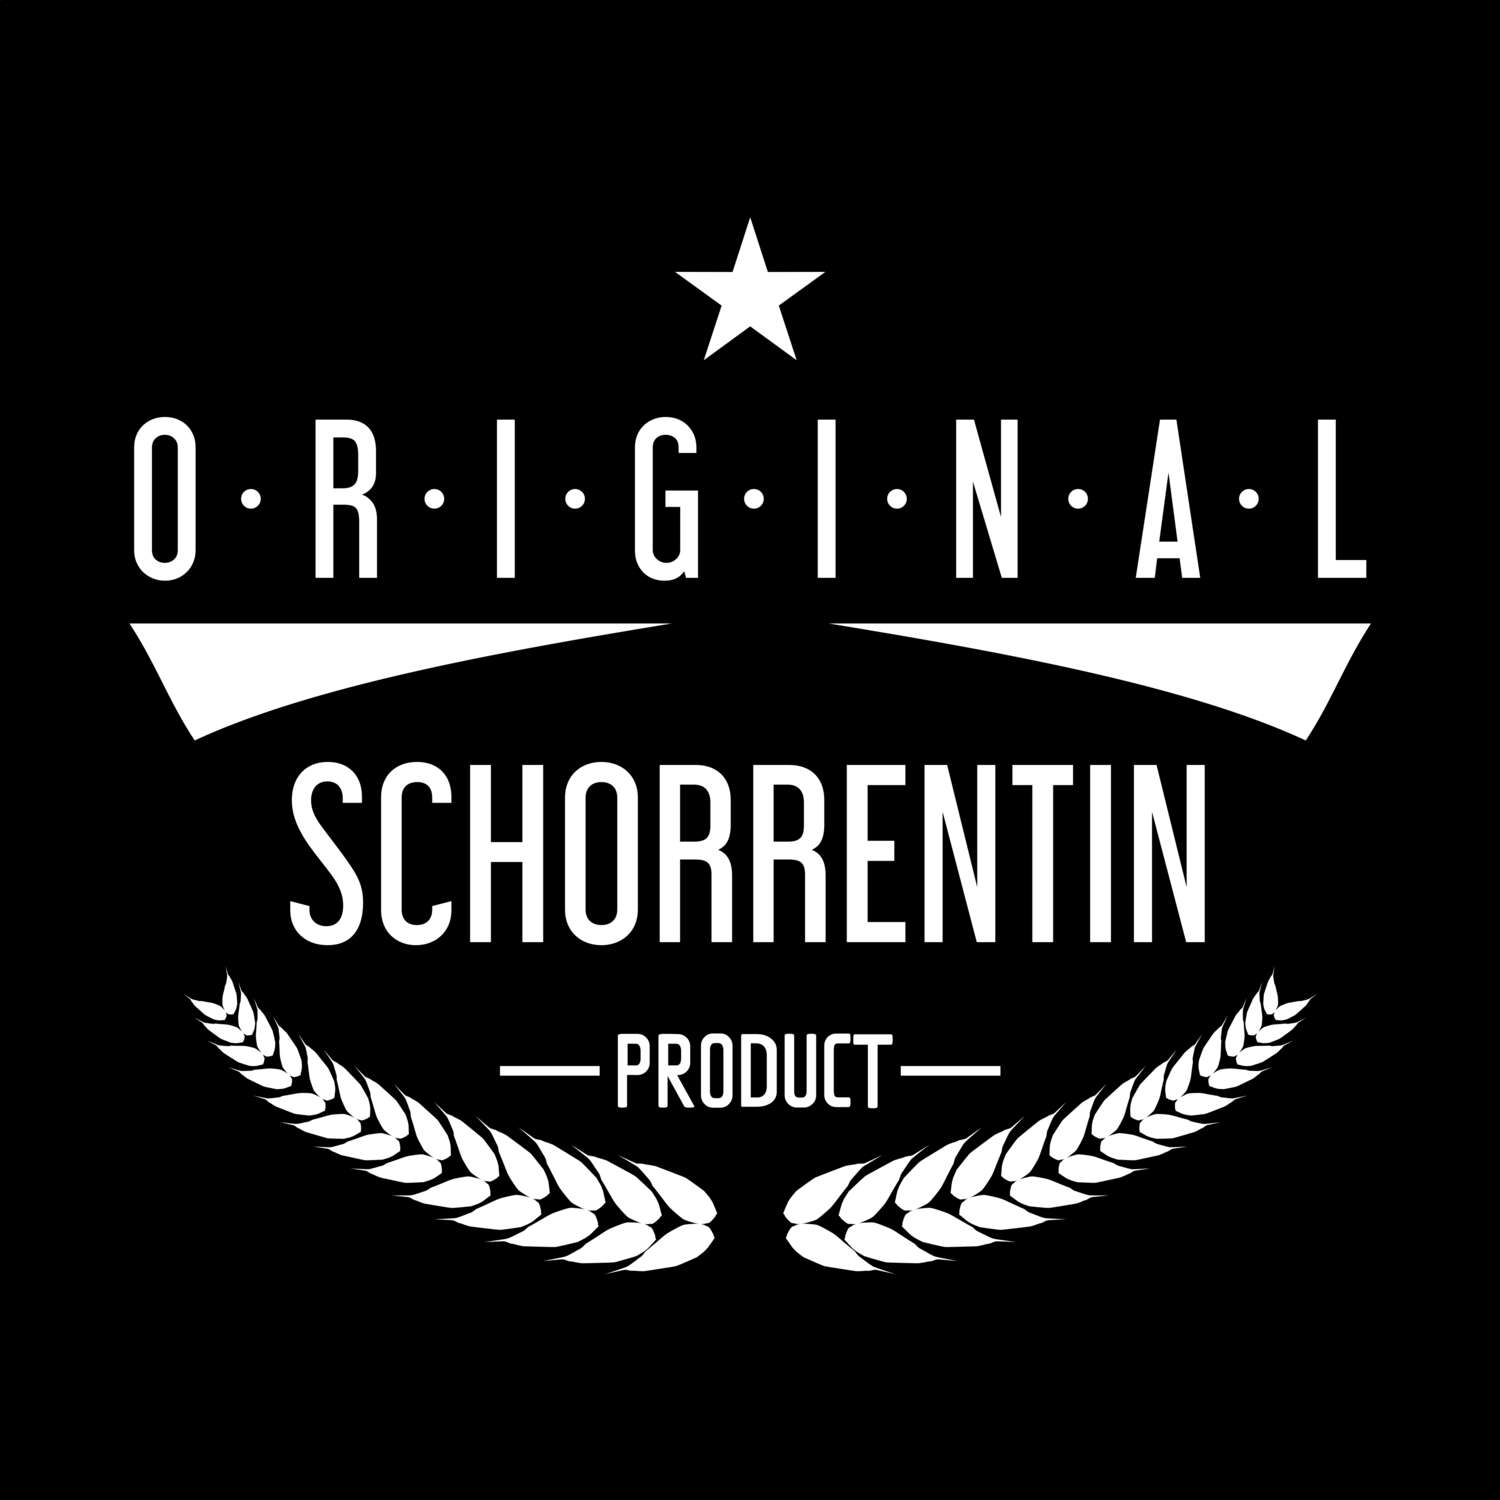 Schorrentin T-Shirt »Original Product«